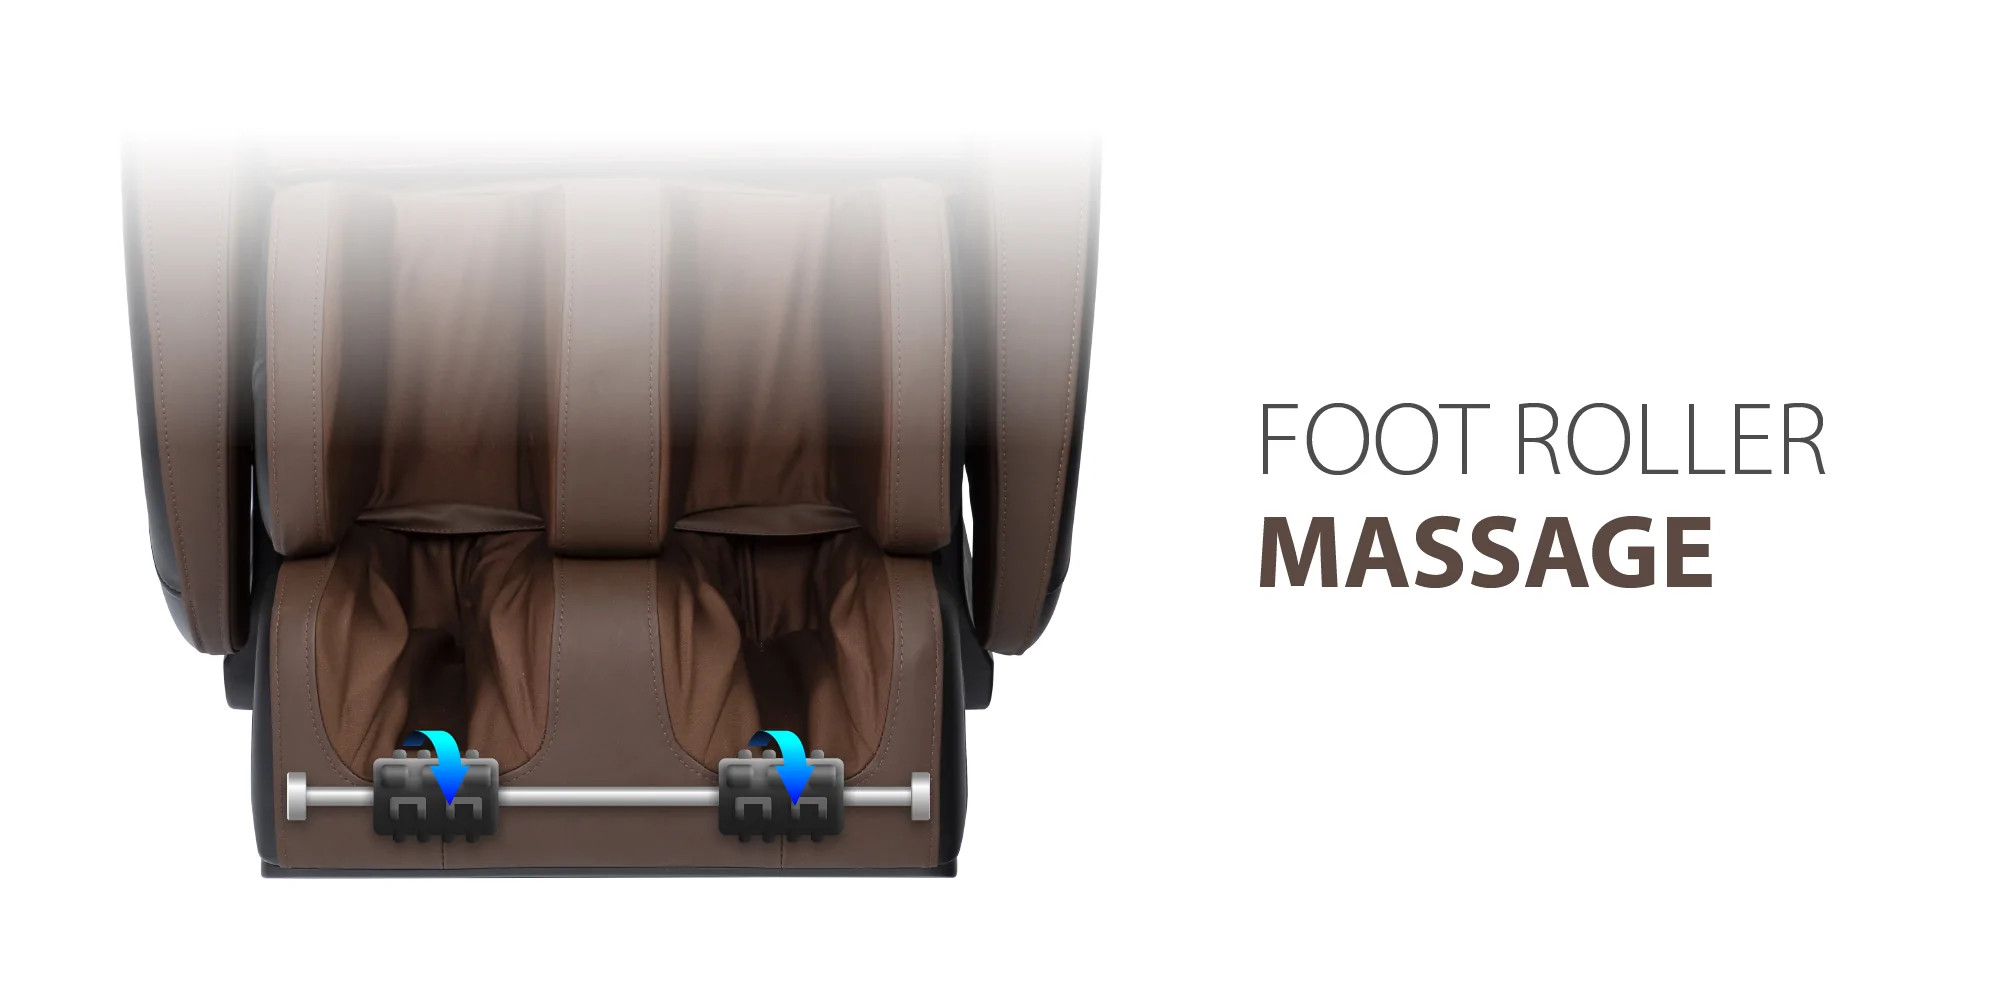 AmaMedic R7 Massage Chair, Foot Roller Massage